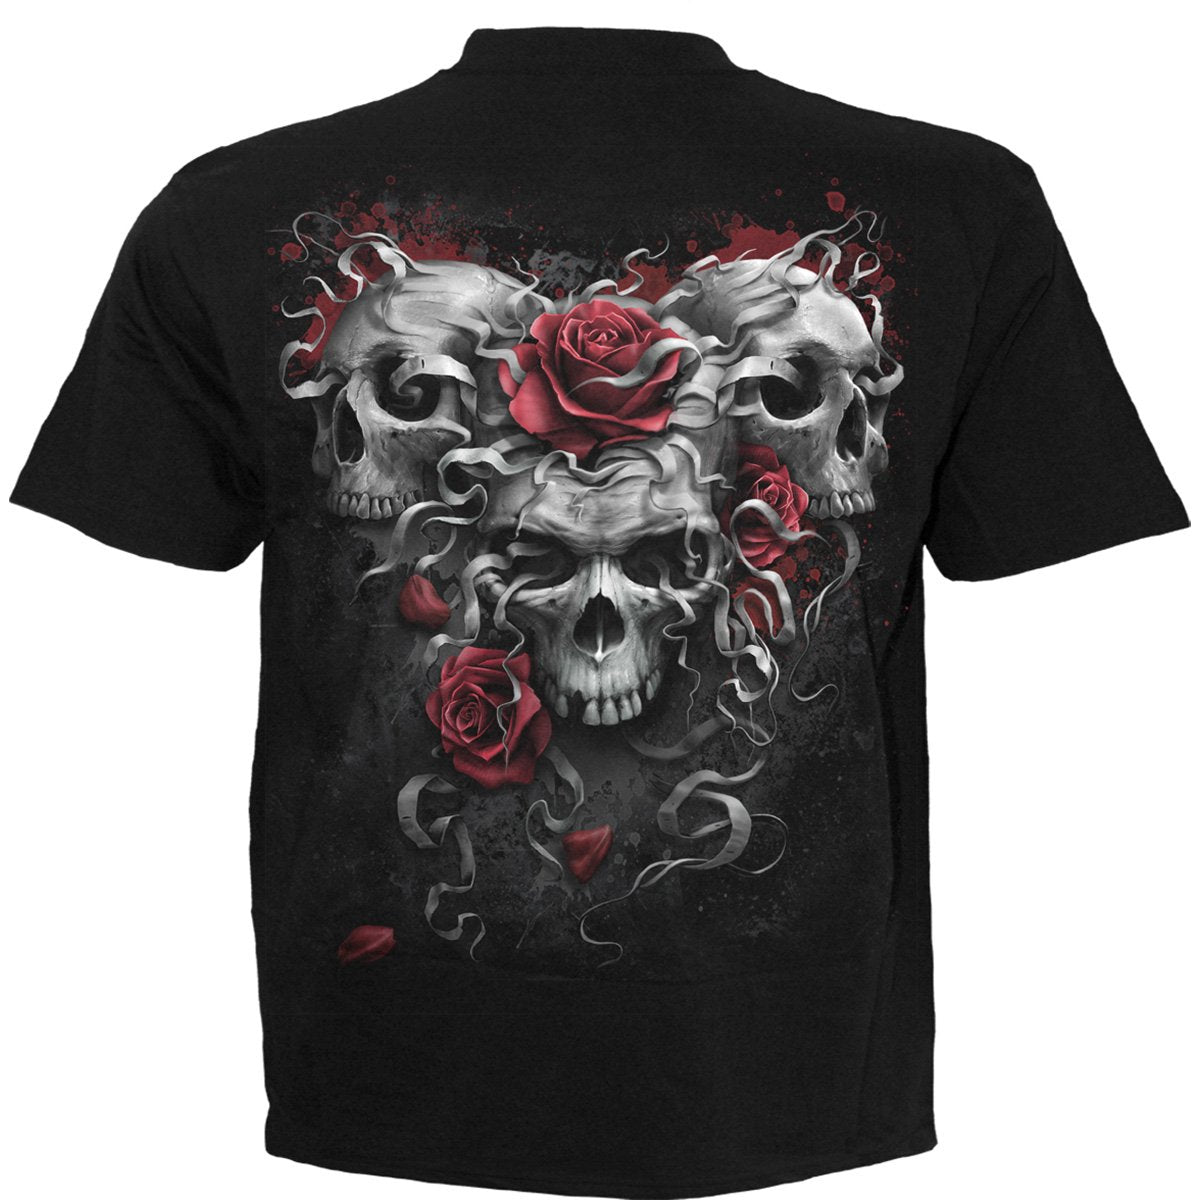 SKULLS N ROSES - T-Shirt Black - Spiral USA